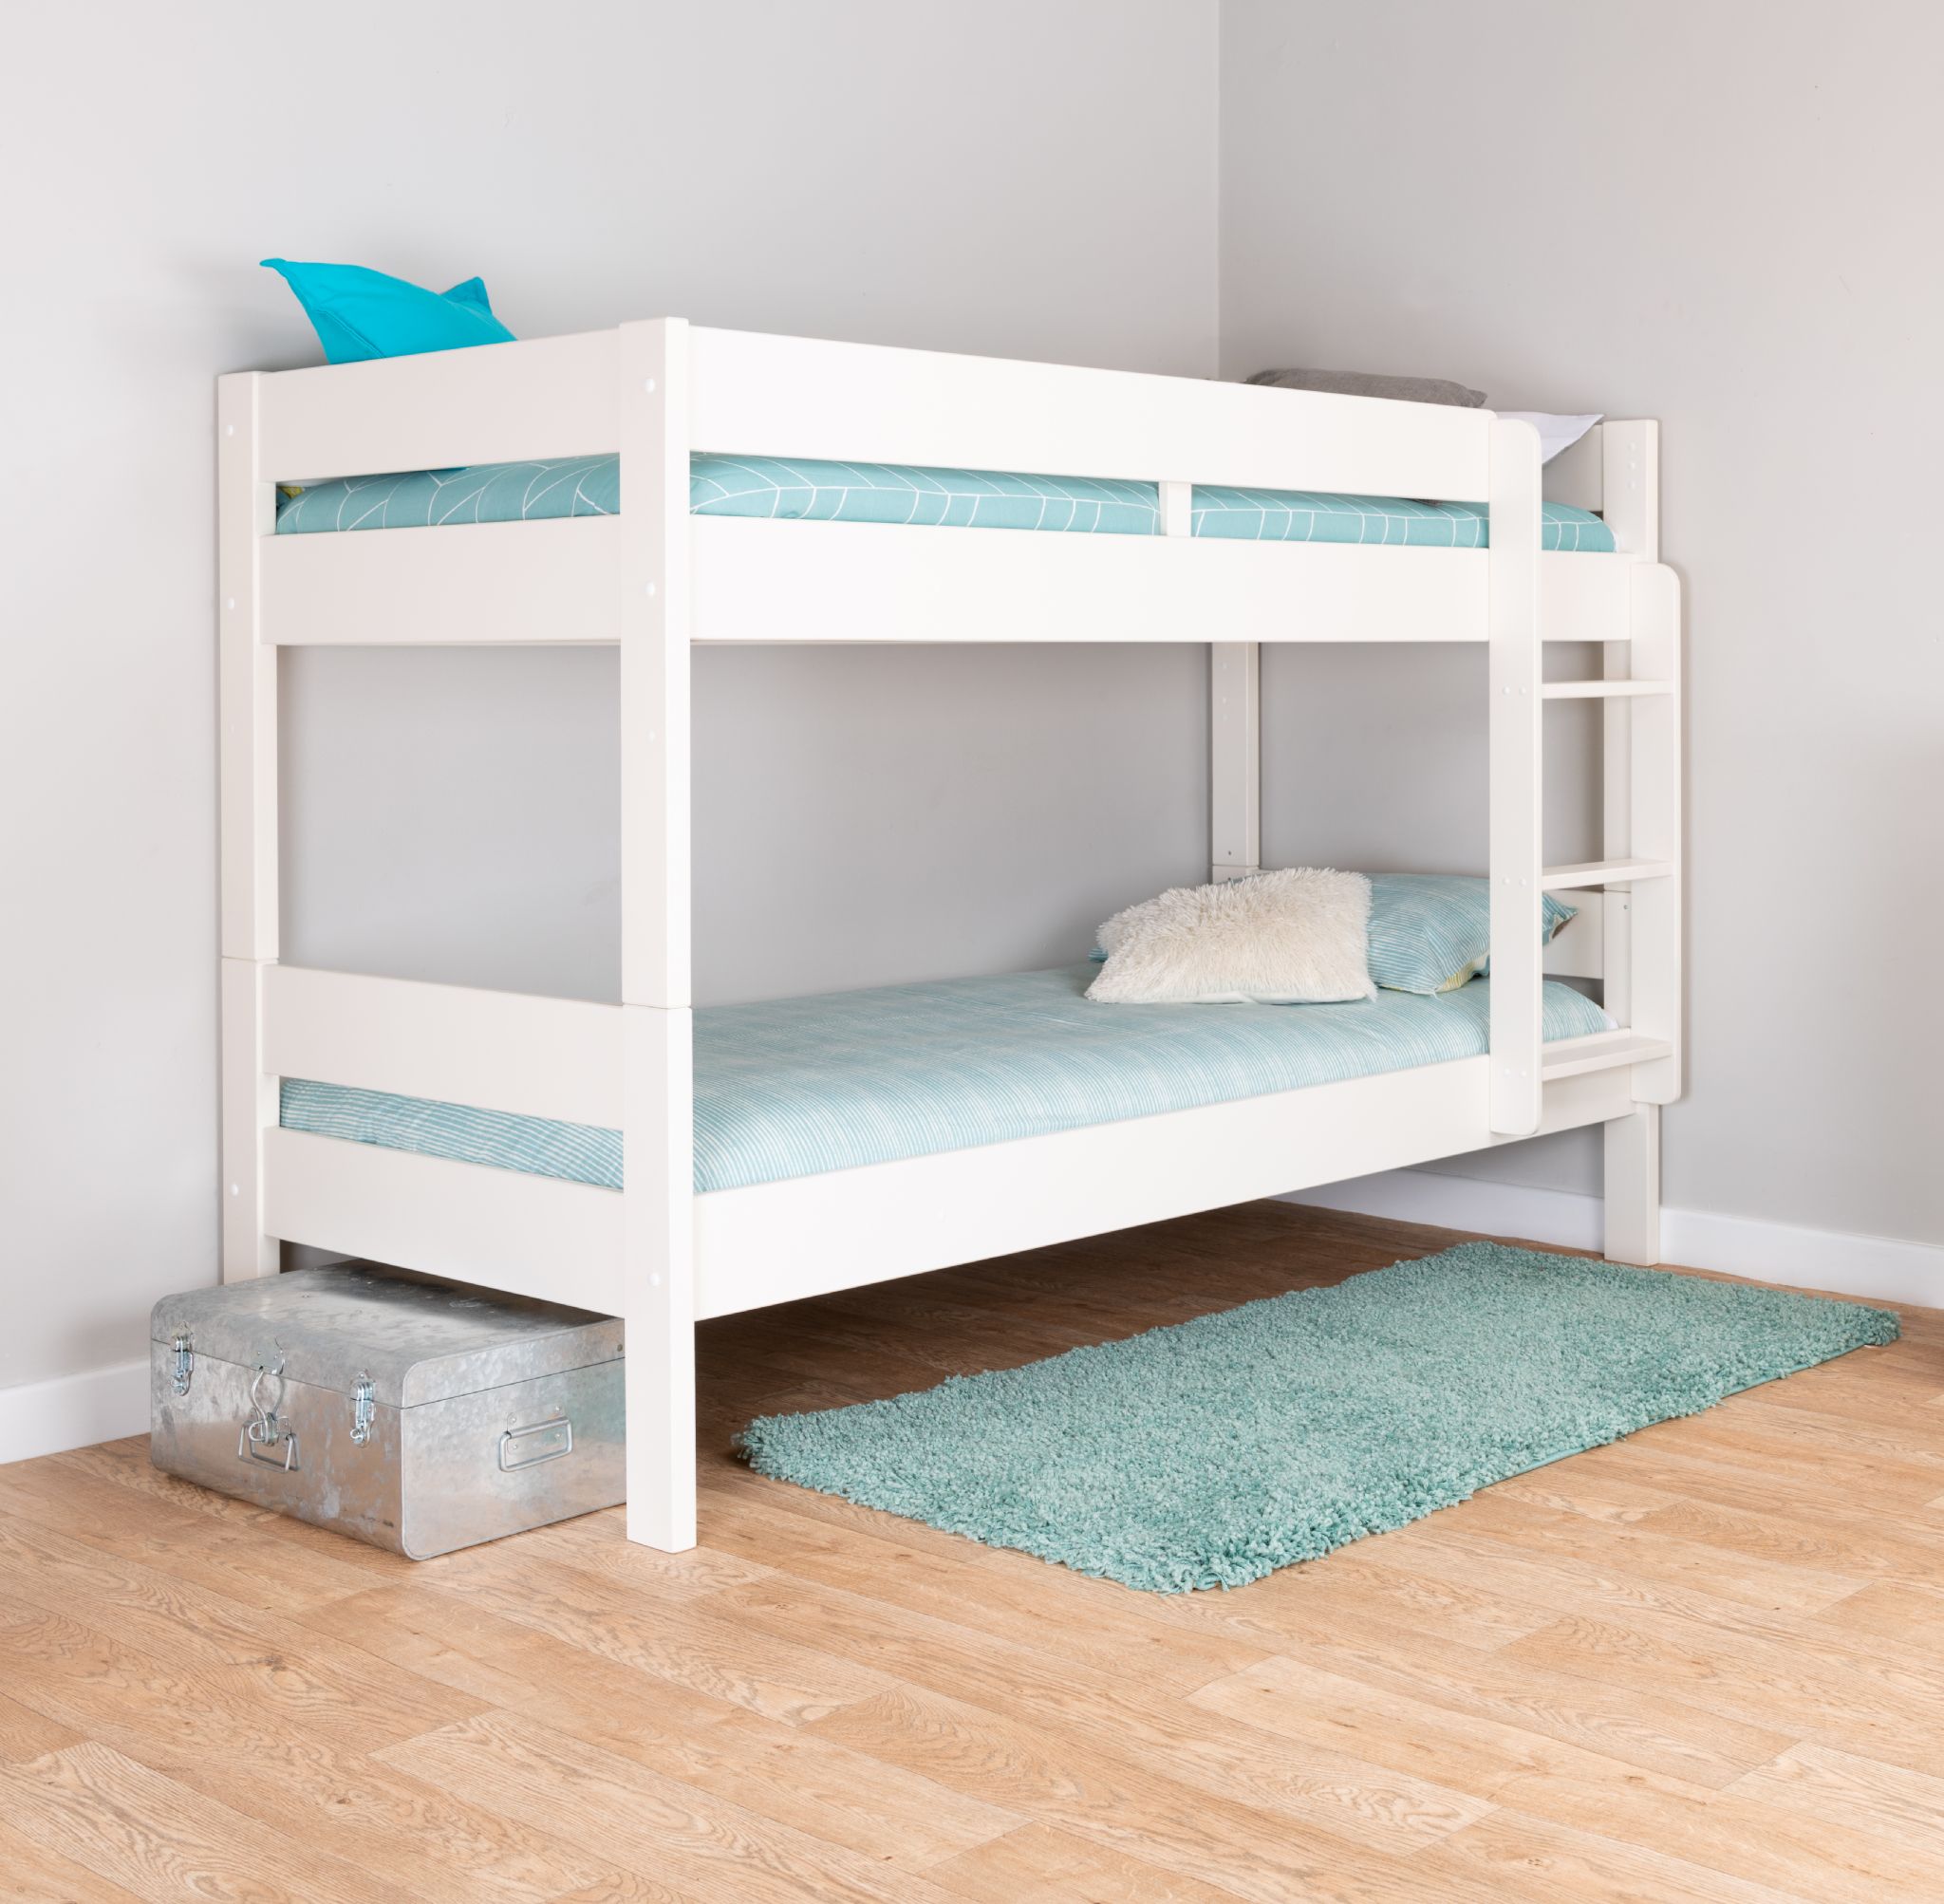 Stompa Compact Detachable Bunk Bed, Bunk Beds Uk